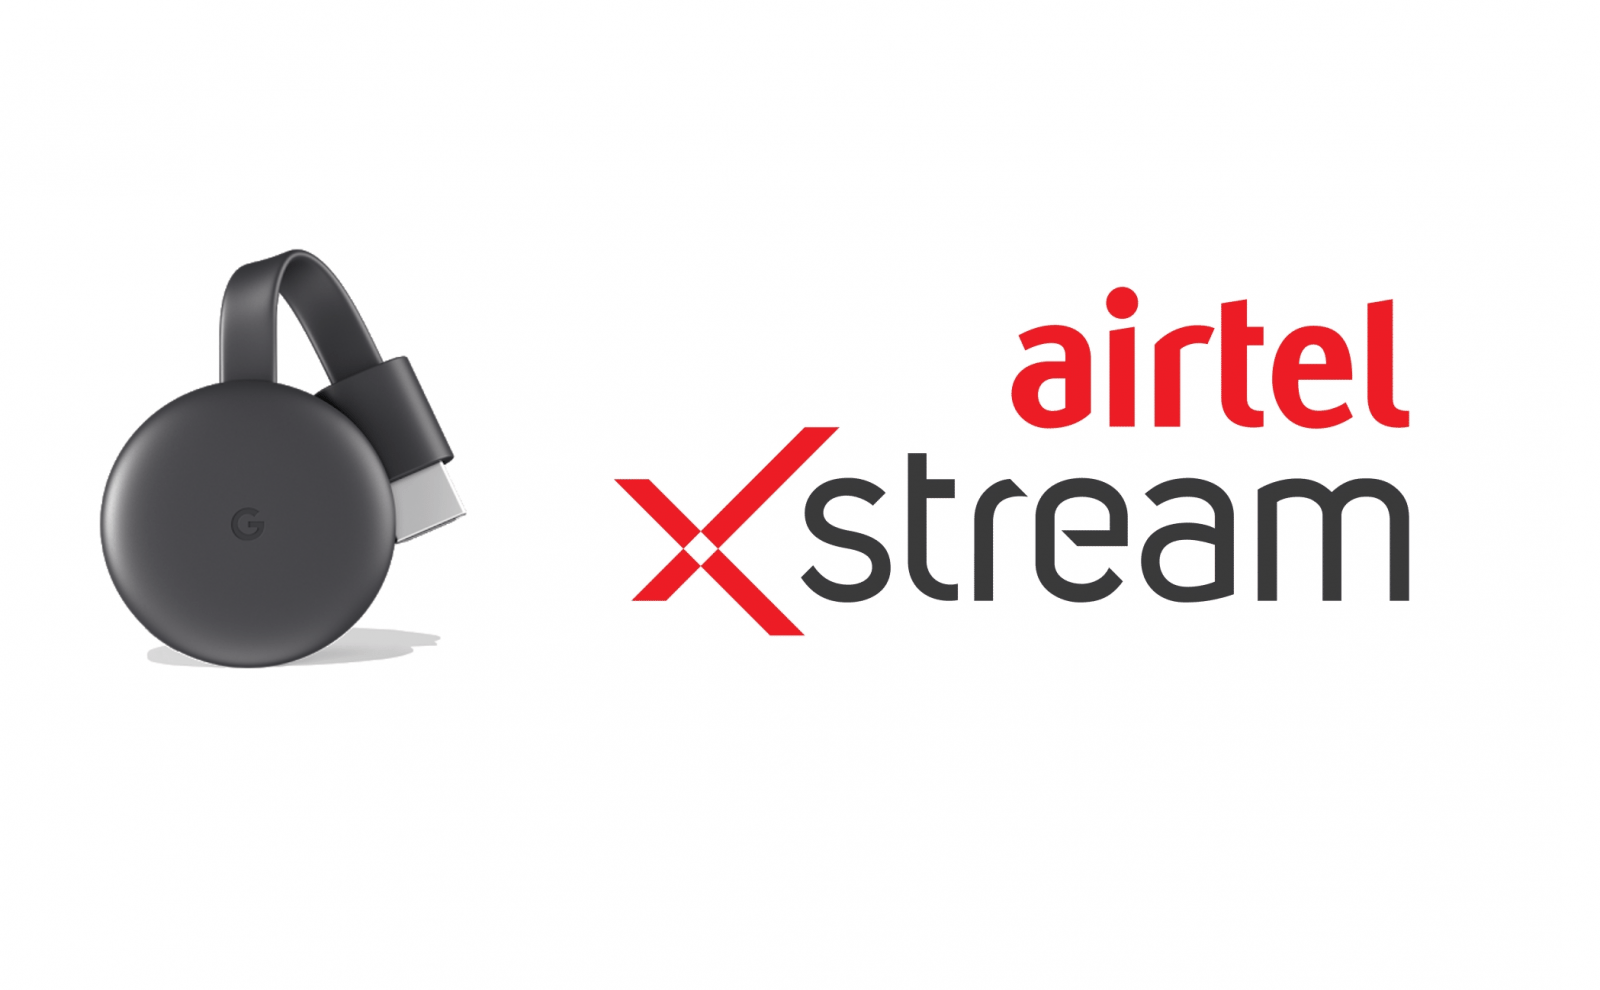 Chromecast Airtel Xstream (1)